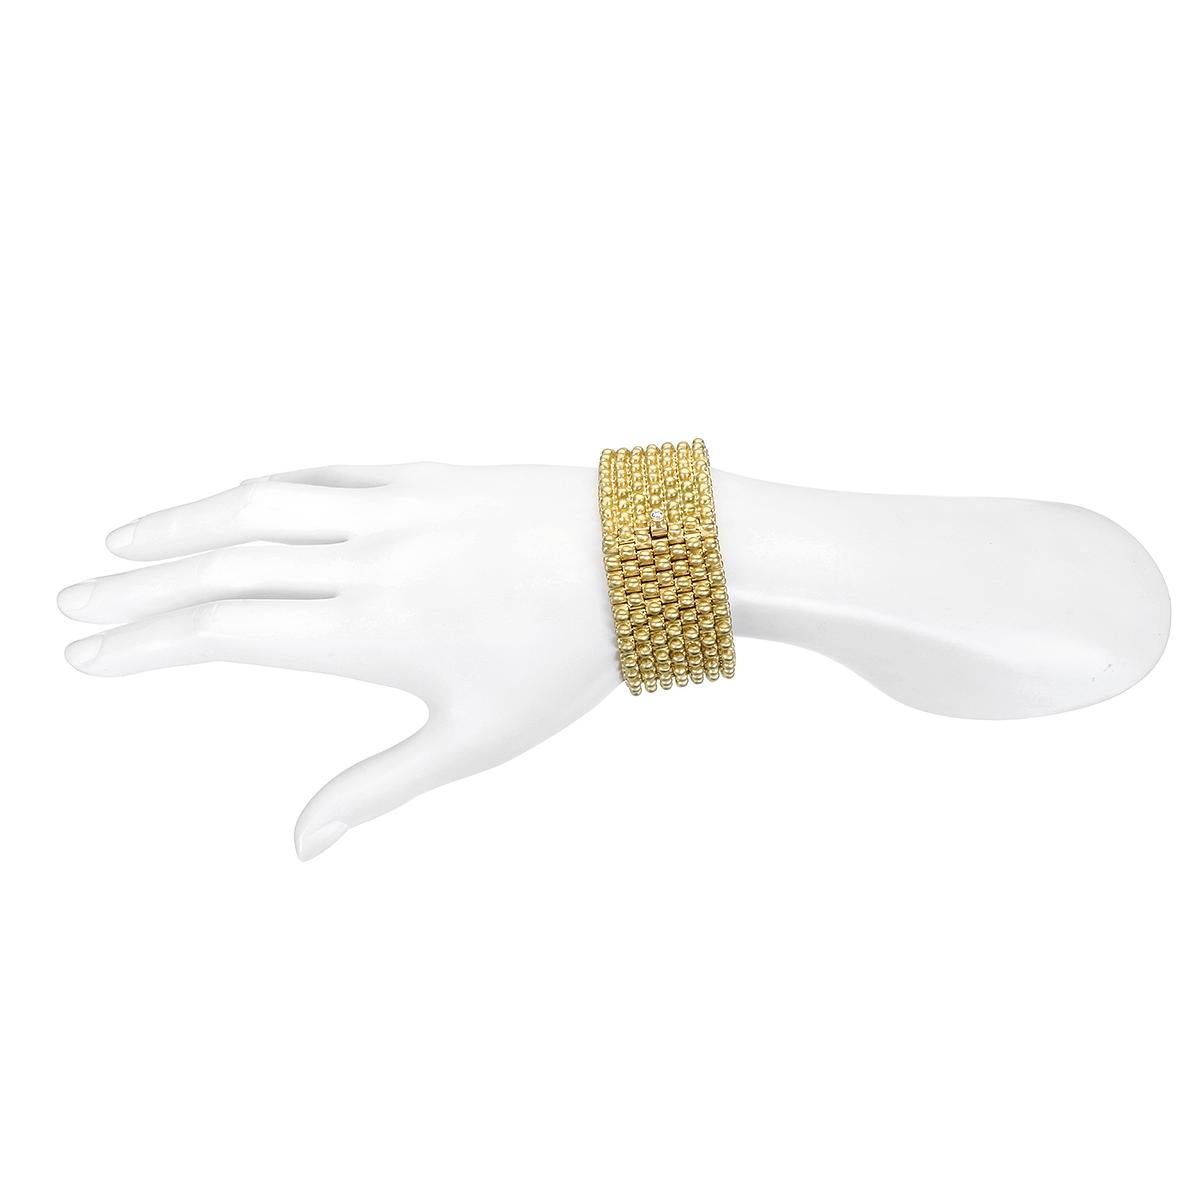 Contemporary Faye Kim 18 Karat Gold Handmade Flexible Link Cuff Bracelet with Diamond Closure